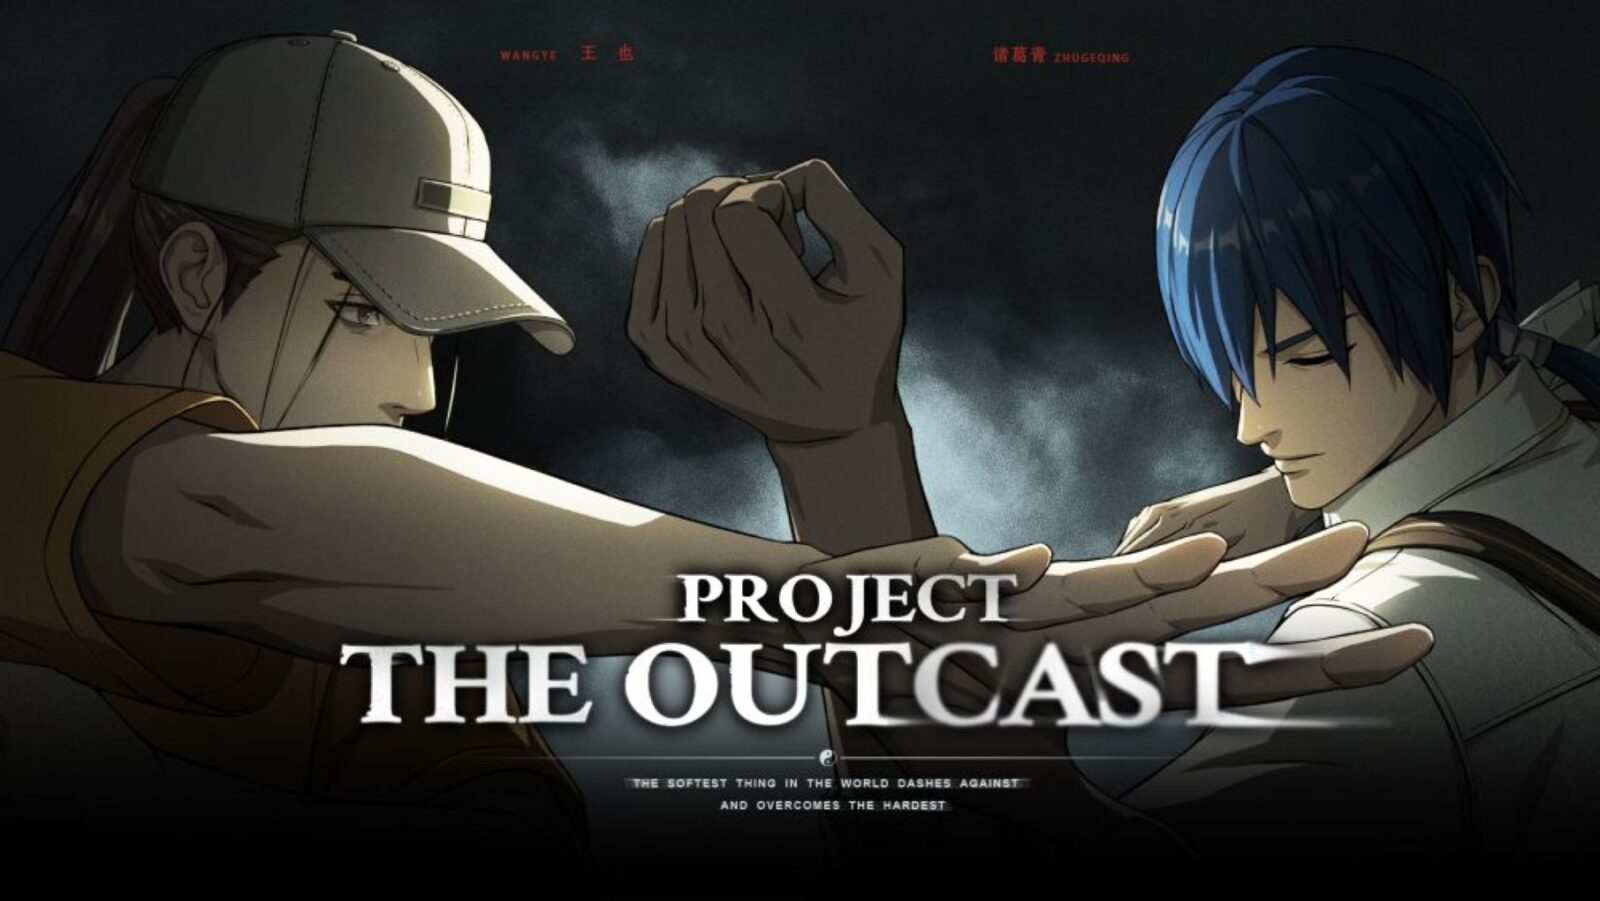 Anime Hitori No Shita: The Outcast - Sinopse, Trailers